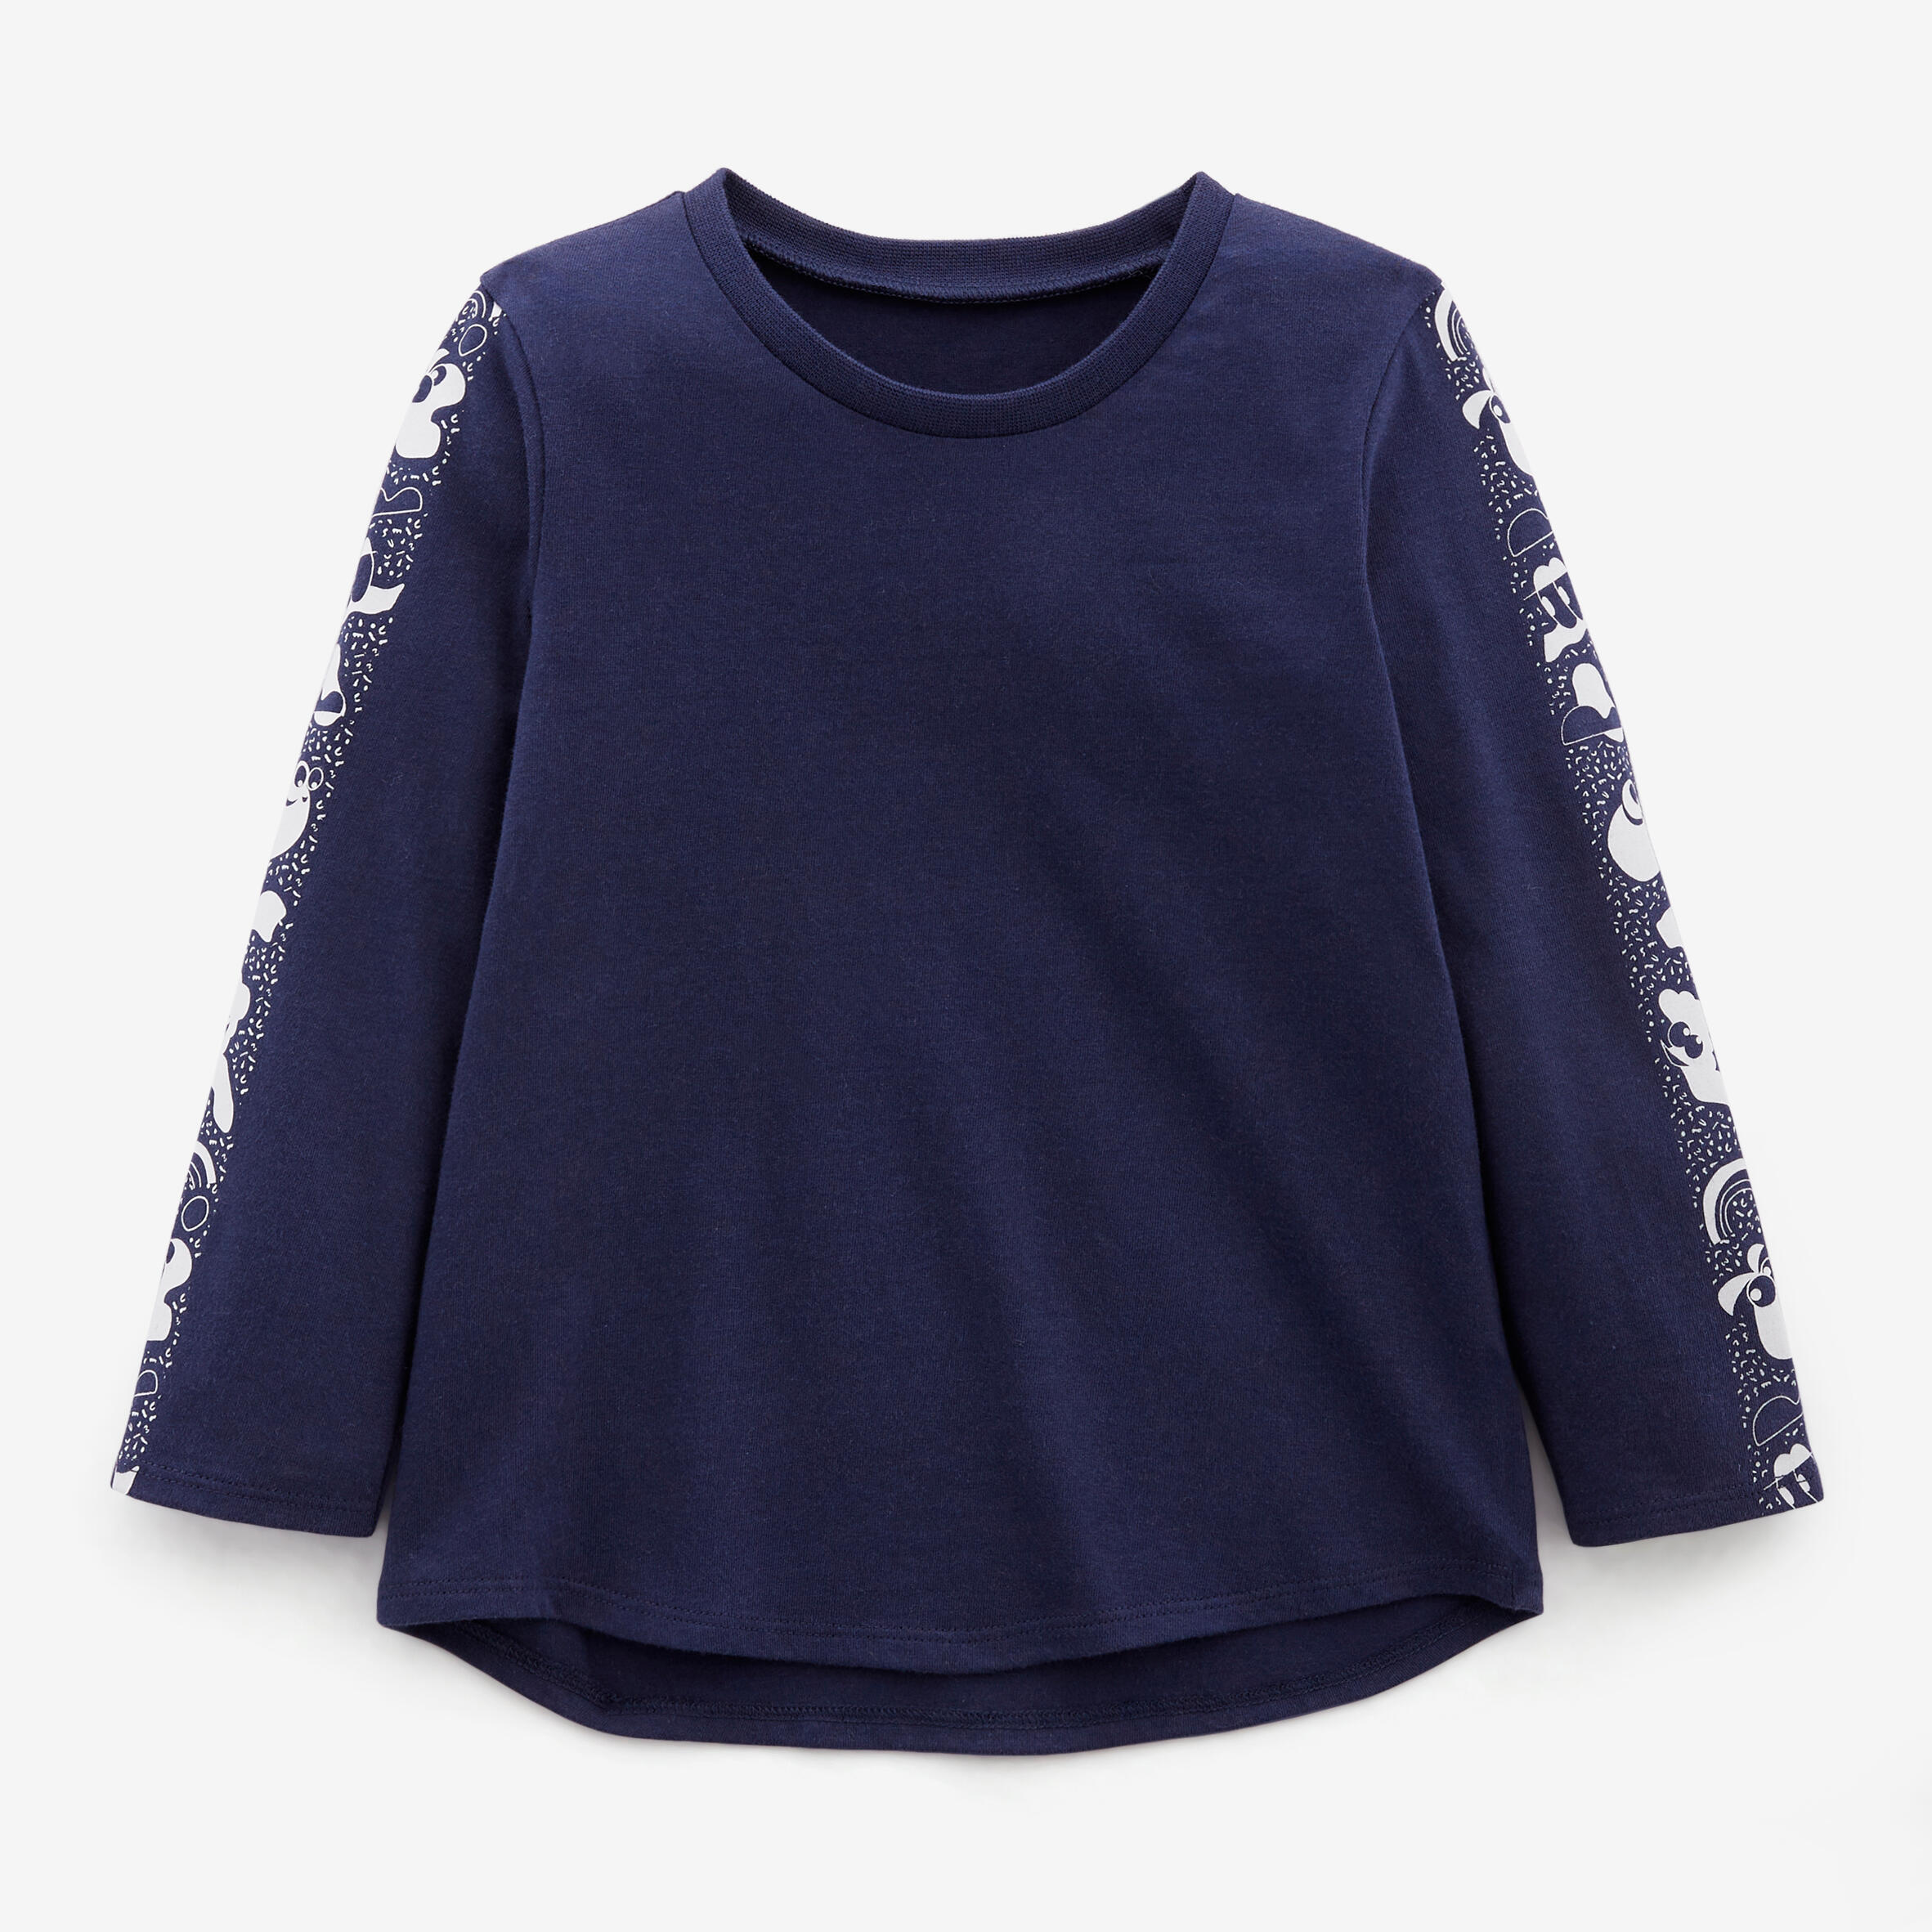 Kids' Baby Gym Long-Sleeved T-Shirt - Navy Blue 2/4